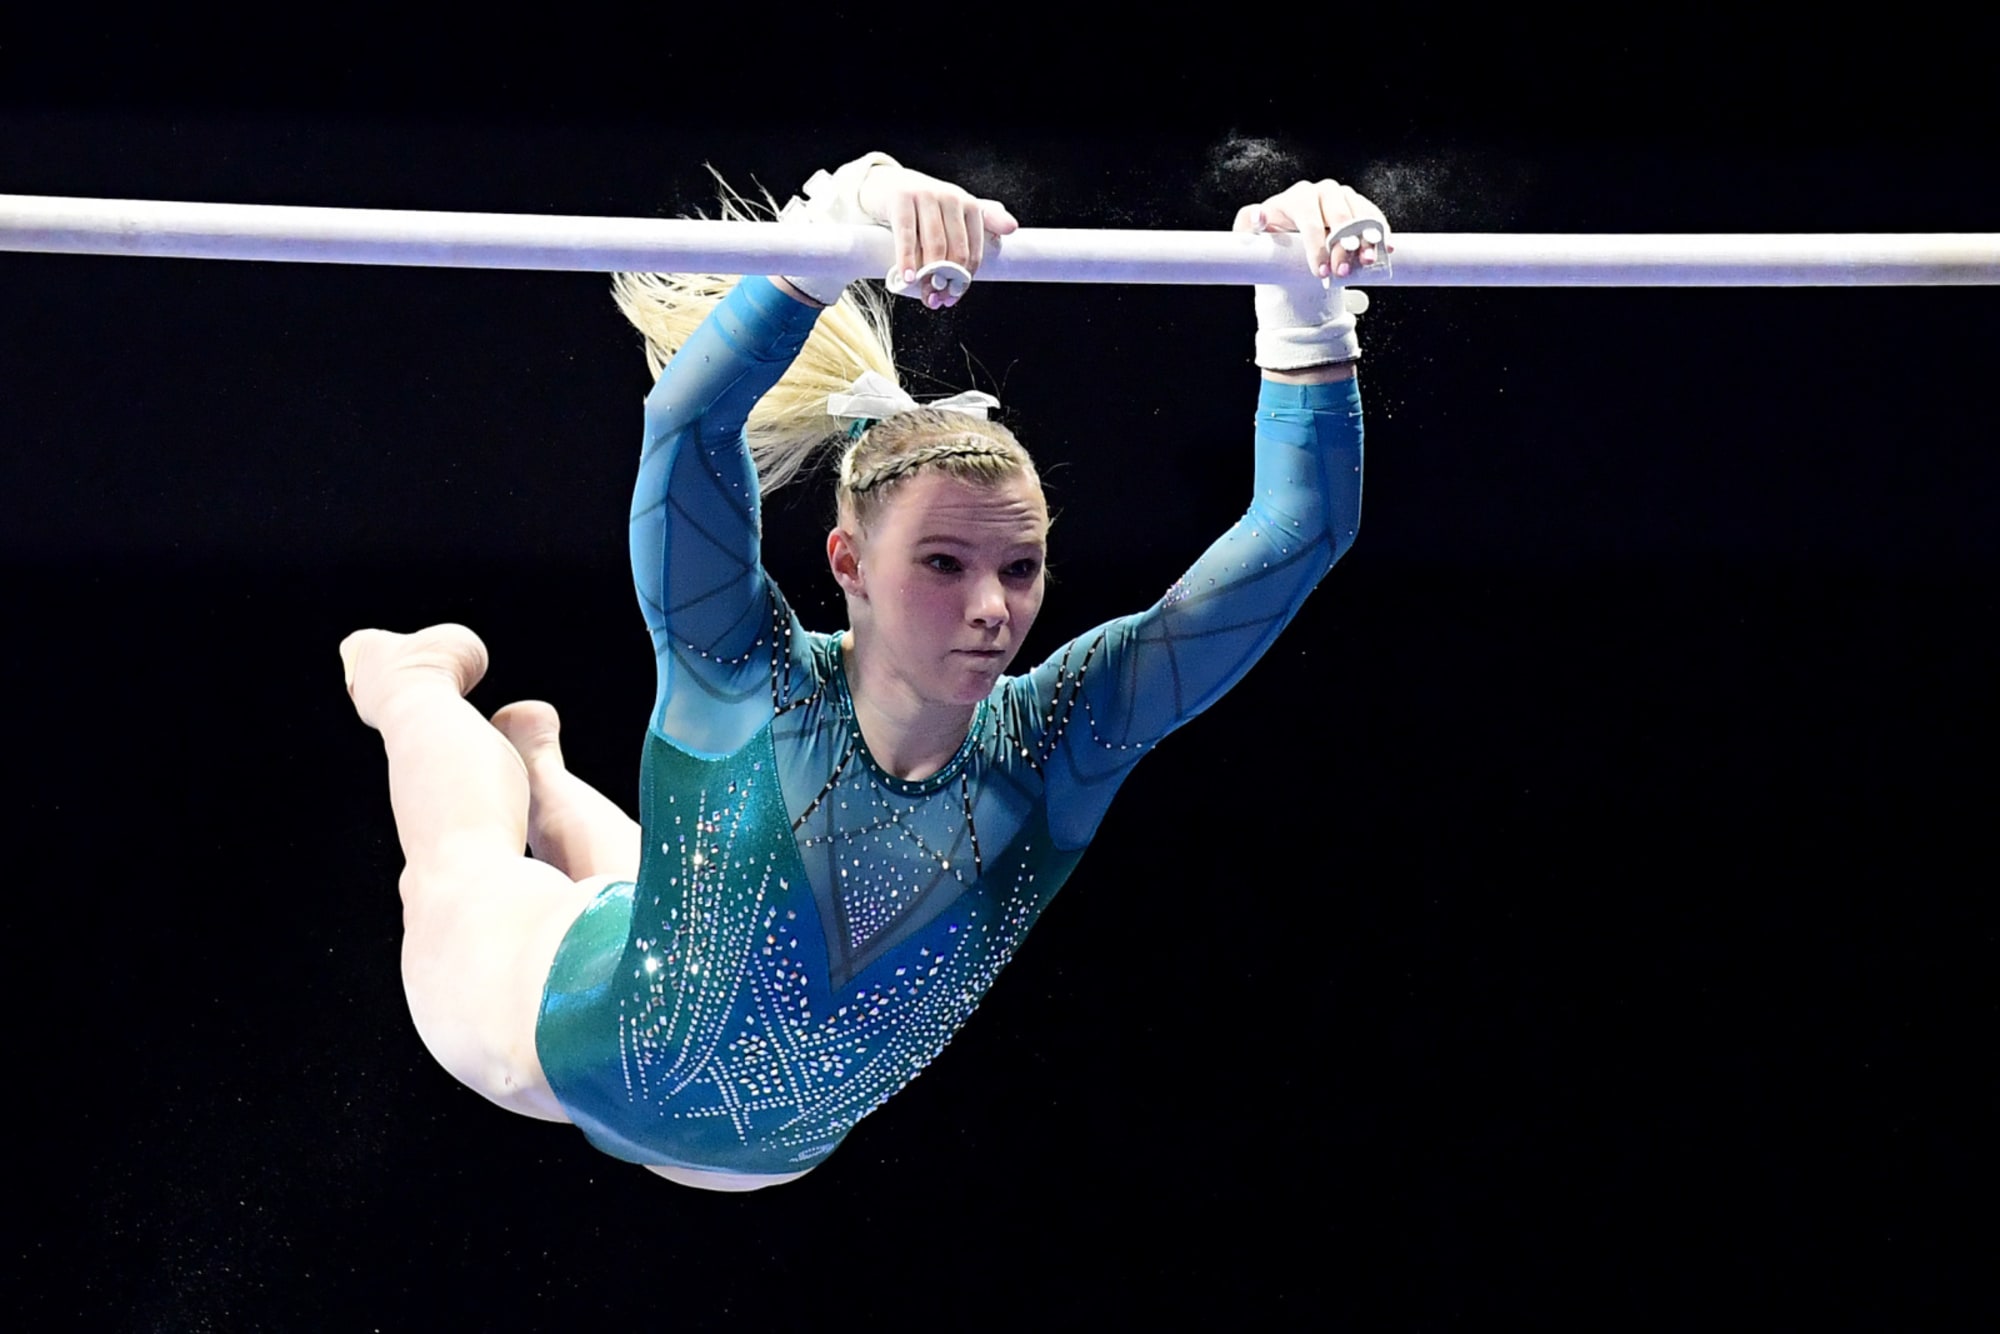 Jade Carey Vault Olympic Qualifying : Two Arizona Sunrays Gymnasts ...